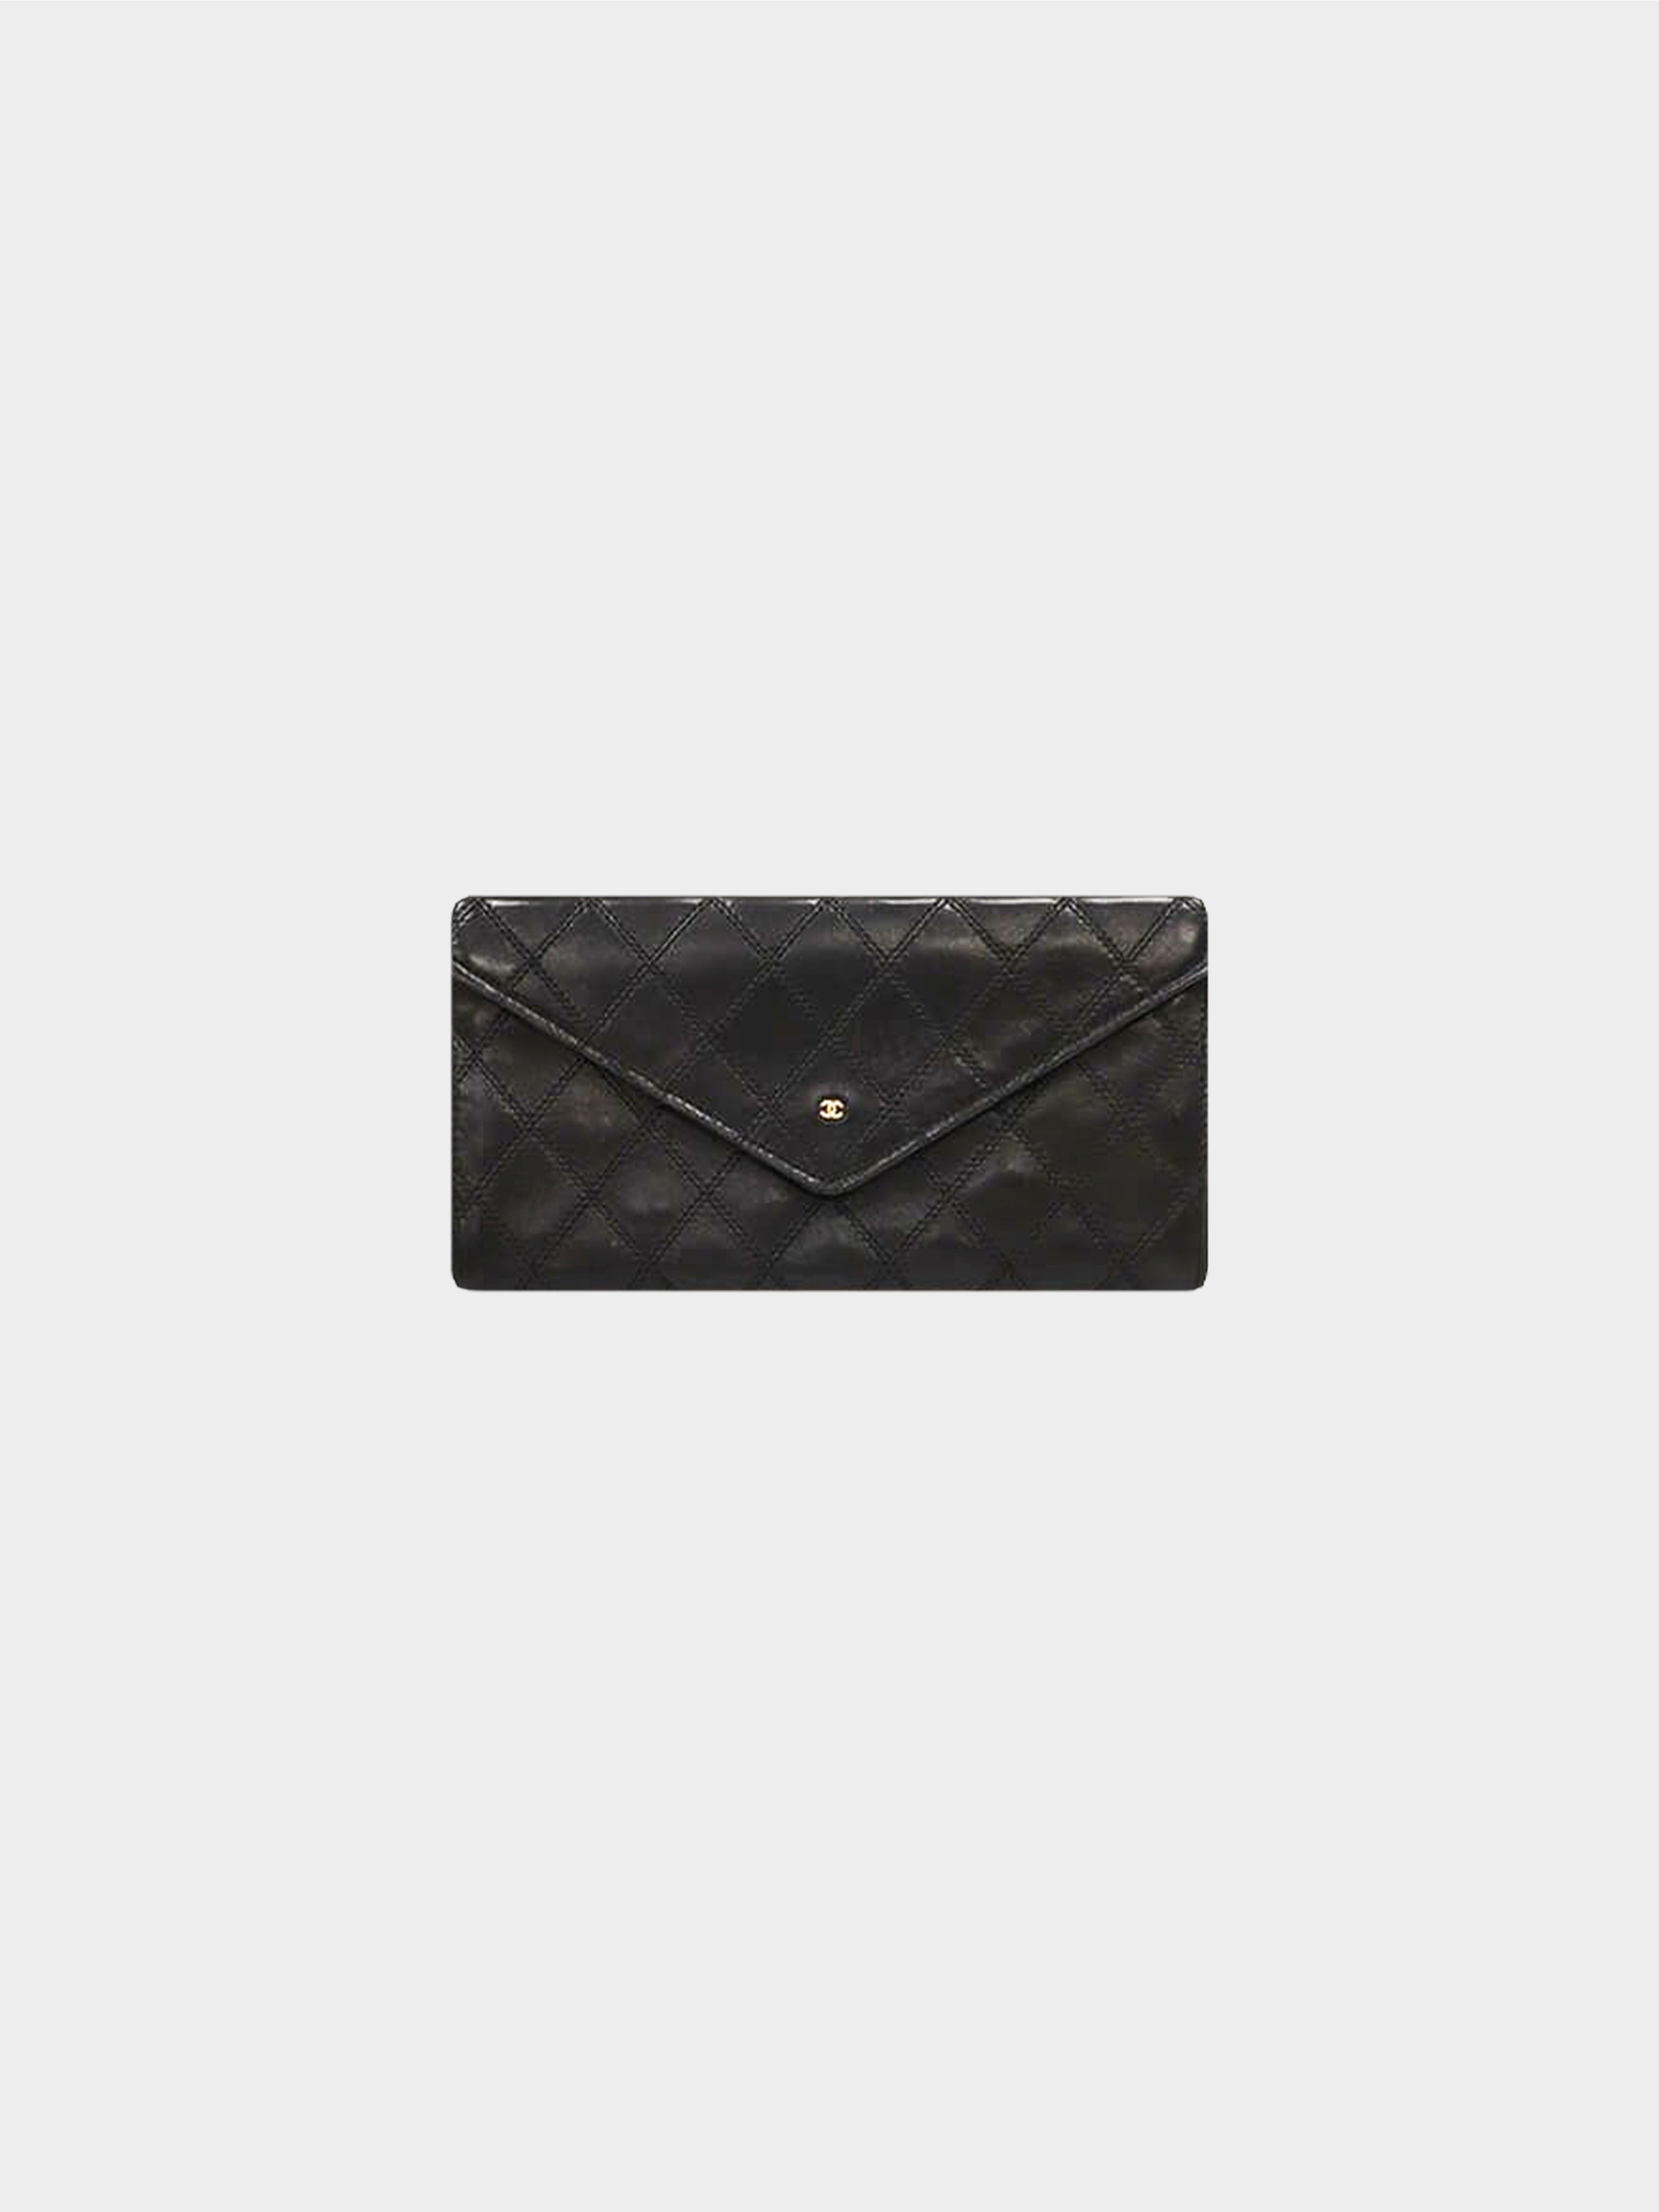 Vintage XL CHANEL Black CC Logo Caviar Leather Shoulder Bag